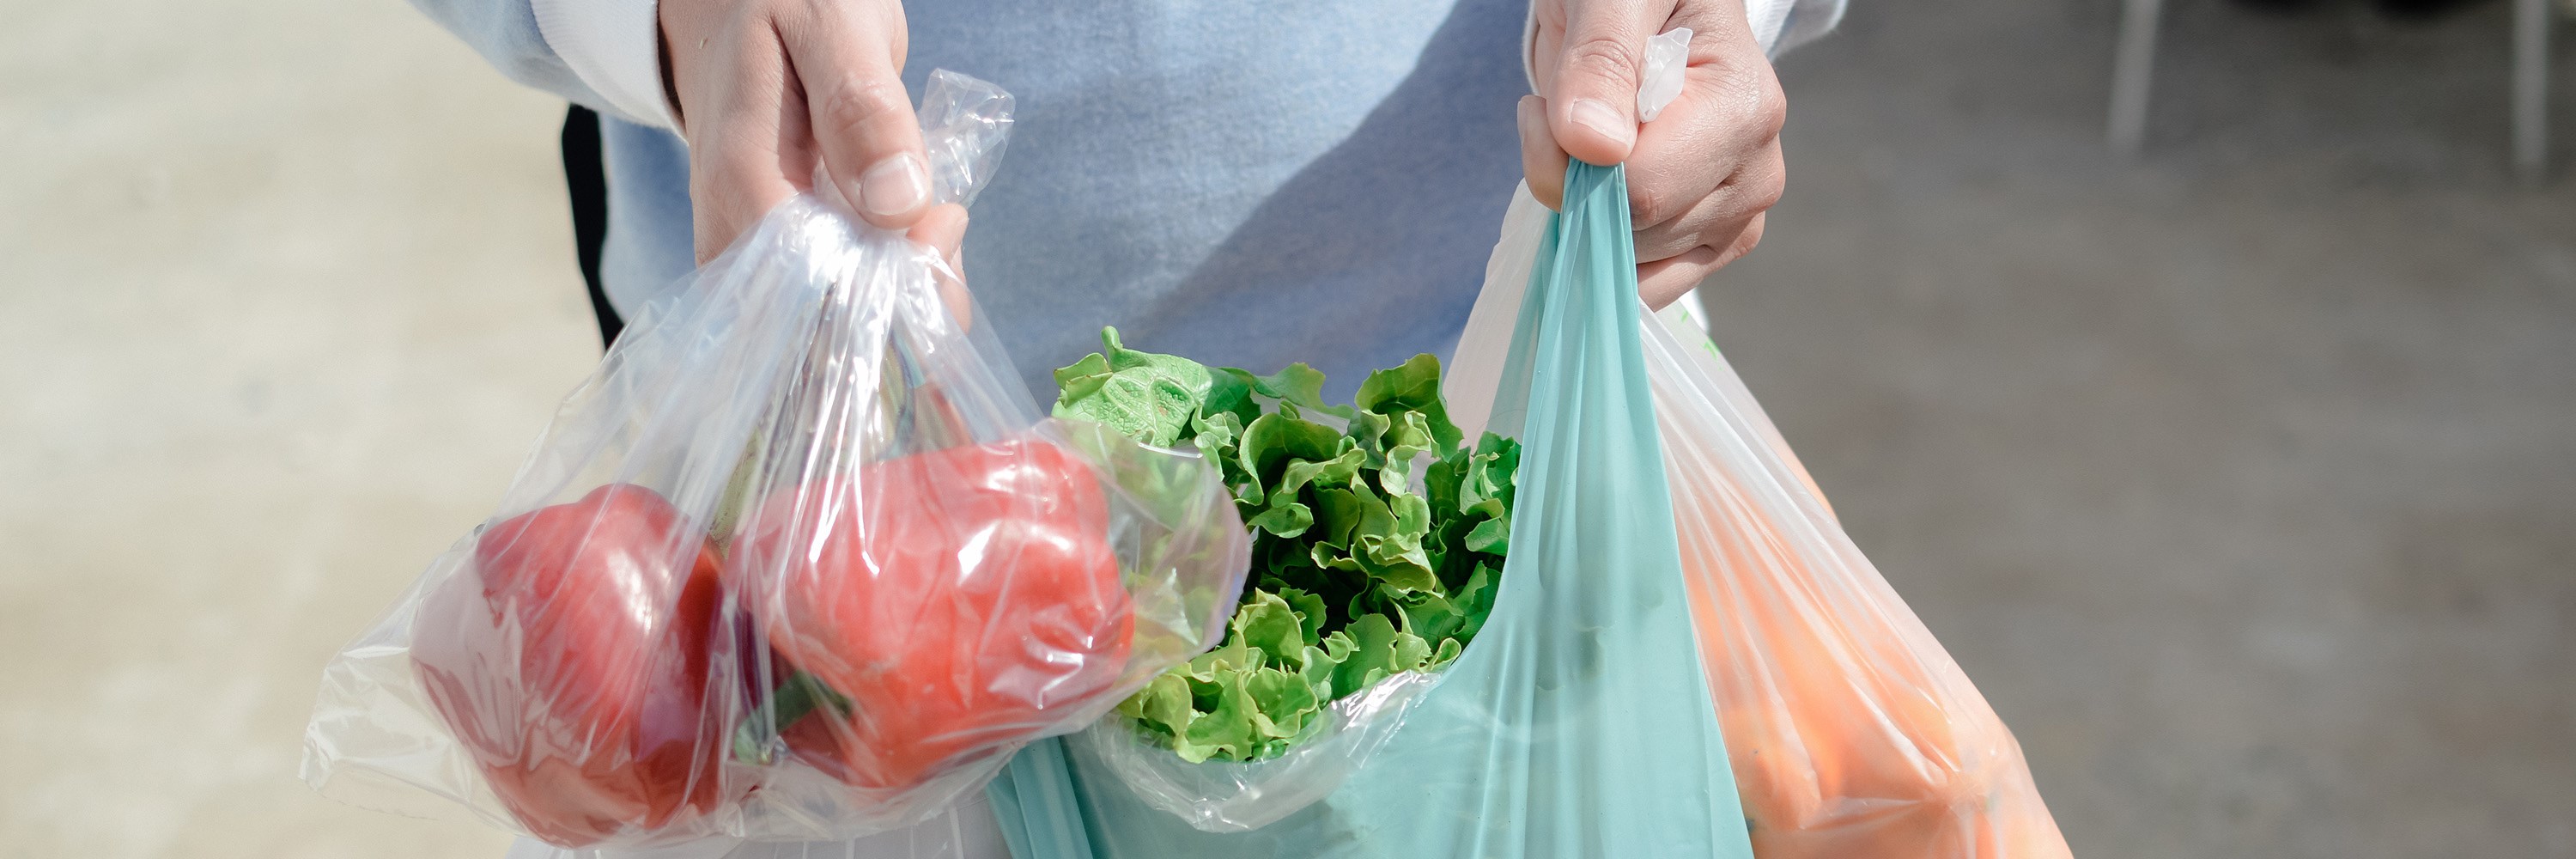 Vegetables in plastic bags. Photo: Arimag/Shutterstock